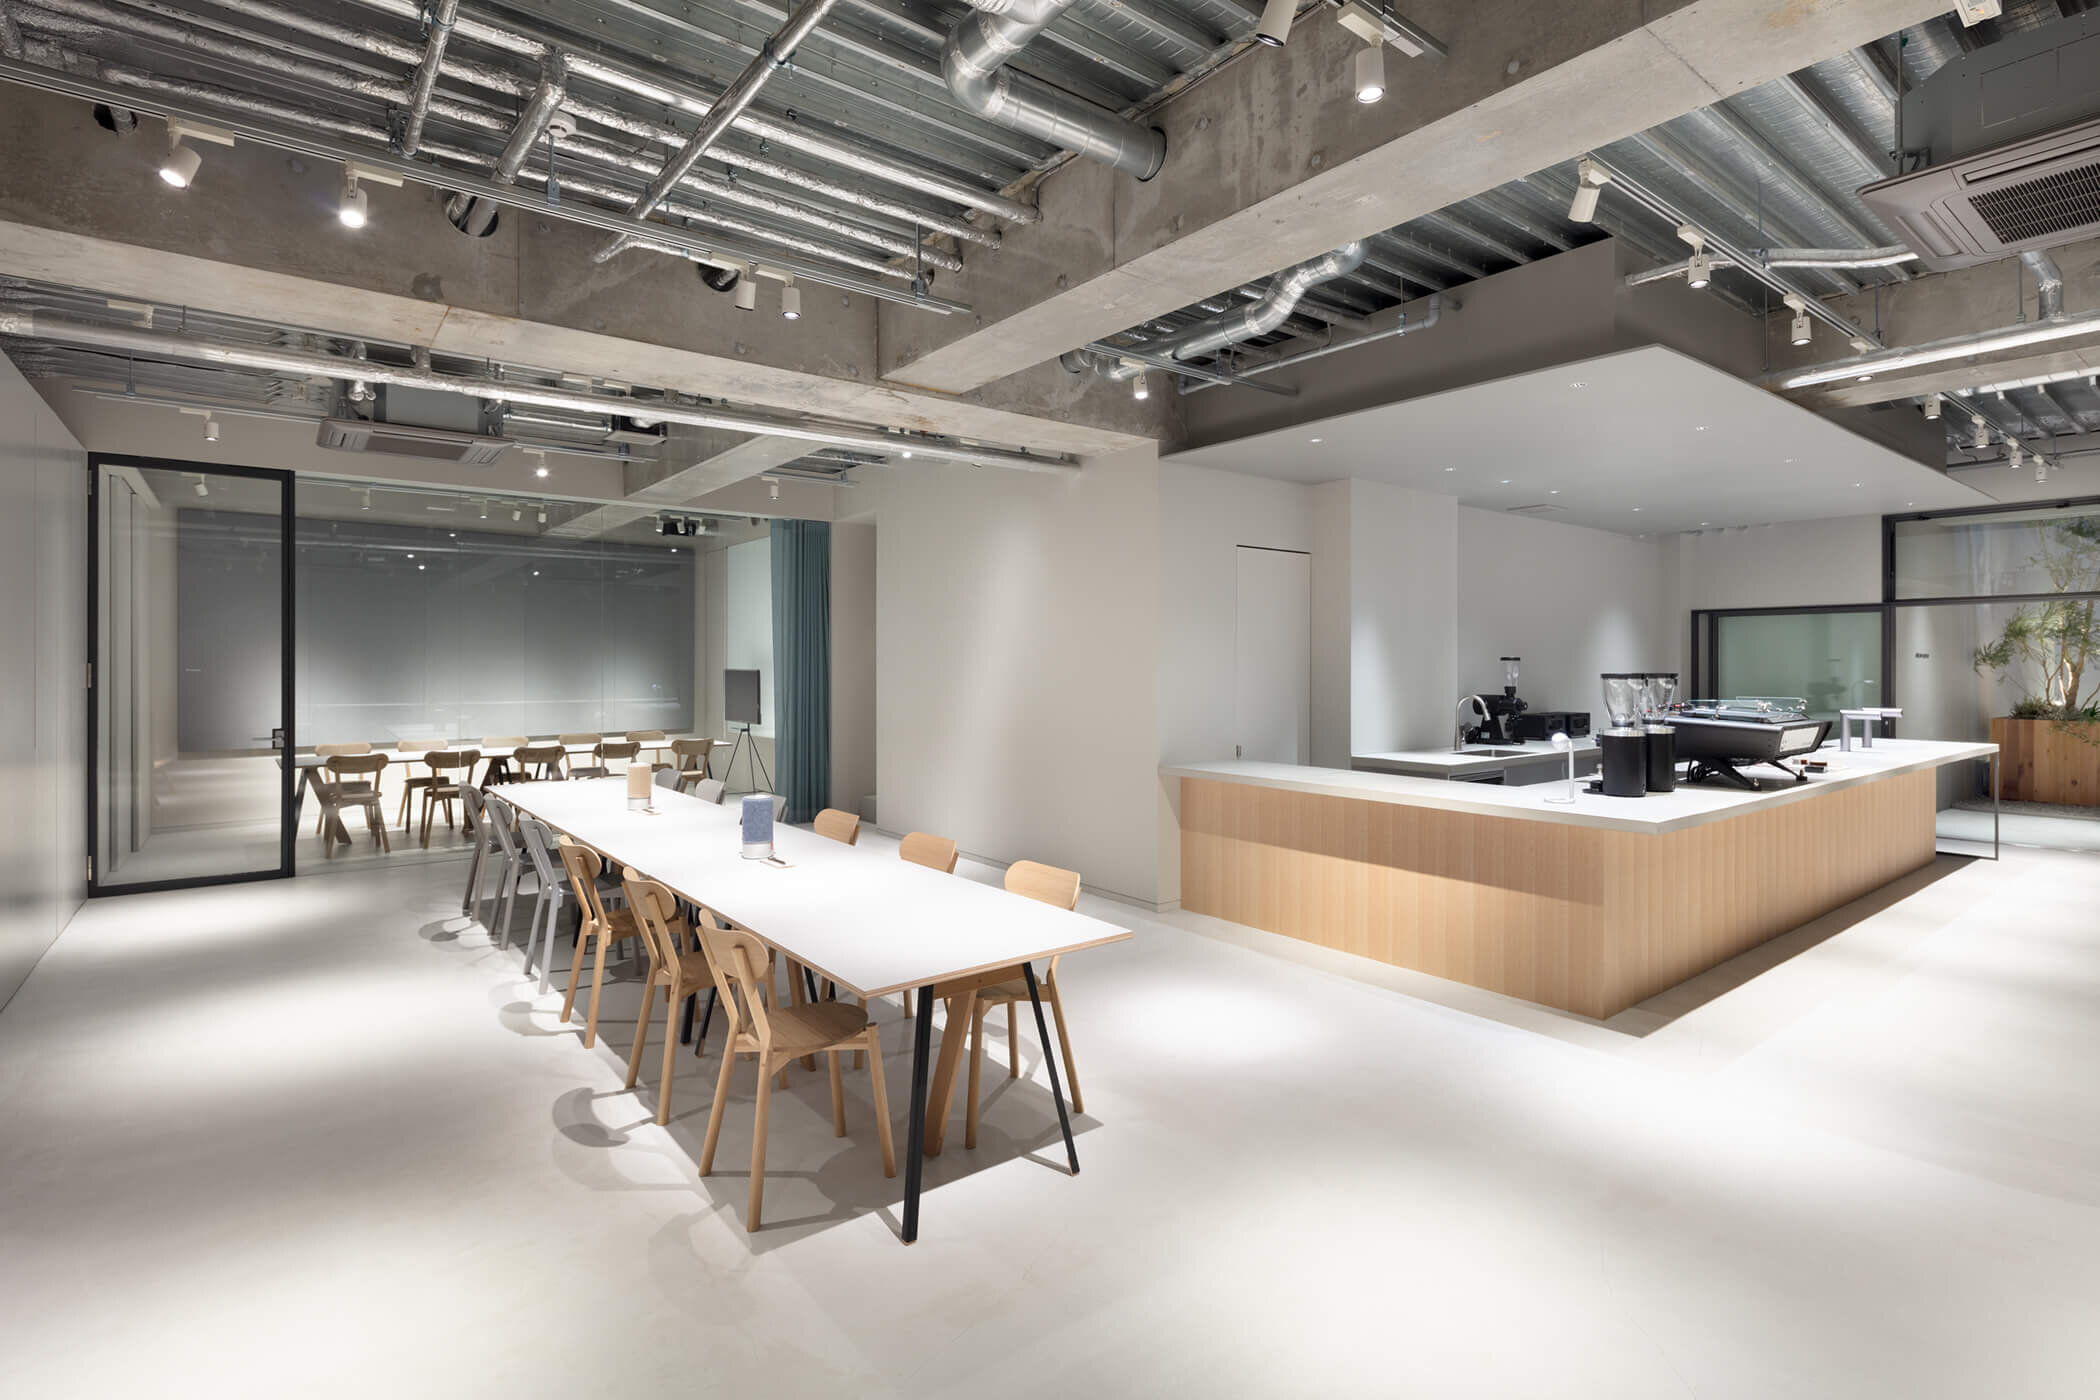 keiji-ashizawa-design-dotcom-space-tokyo-japan-cafe-interior-design-idreit-134.jpg